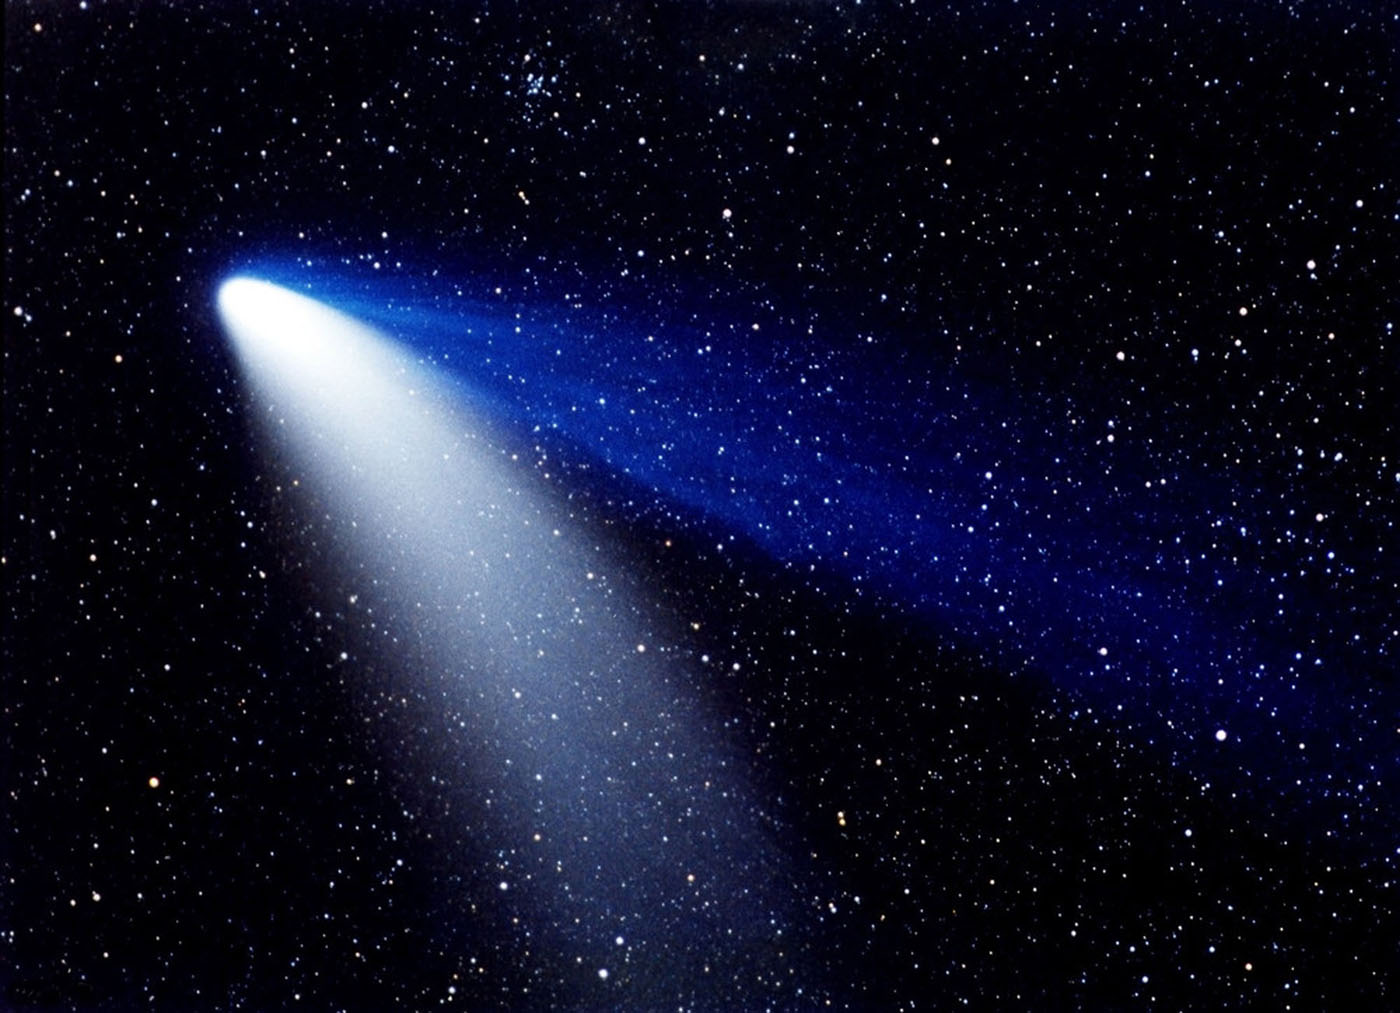 http://www.meteoweb.eu/wp-content/uploads/2013/01/comete.jpg